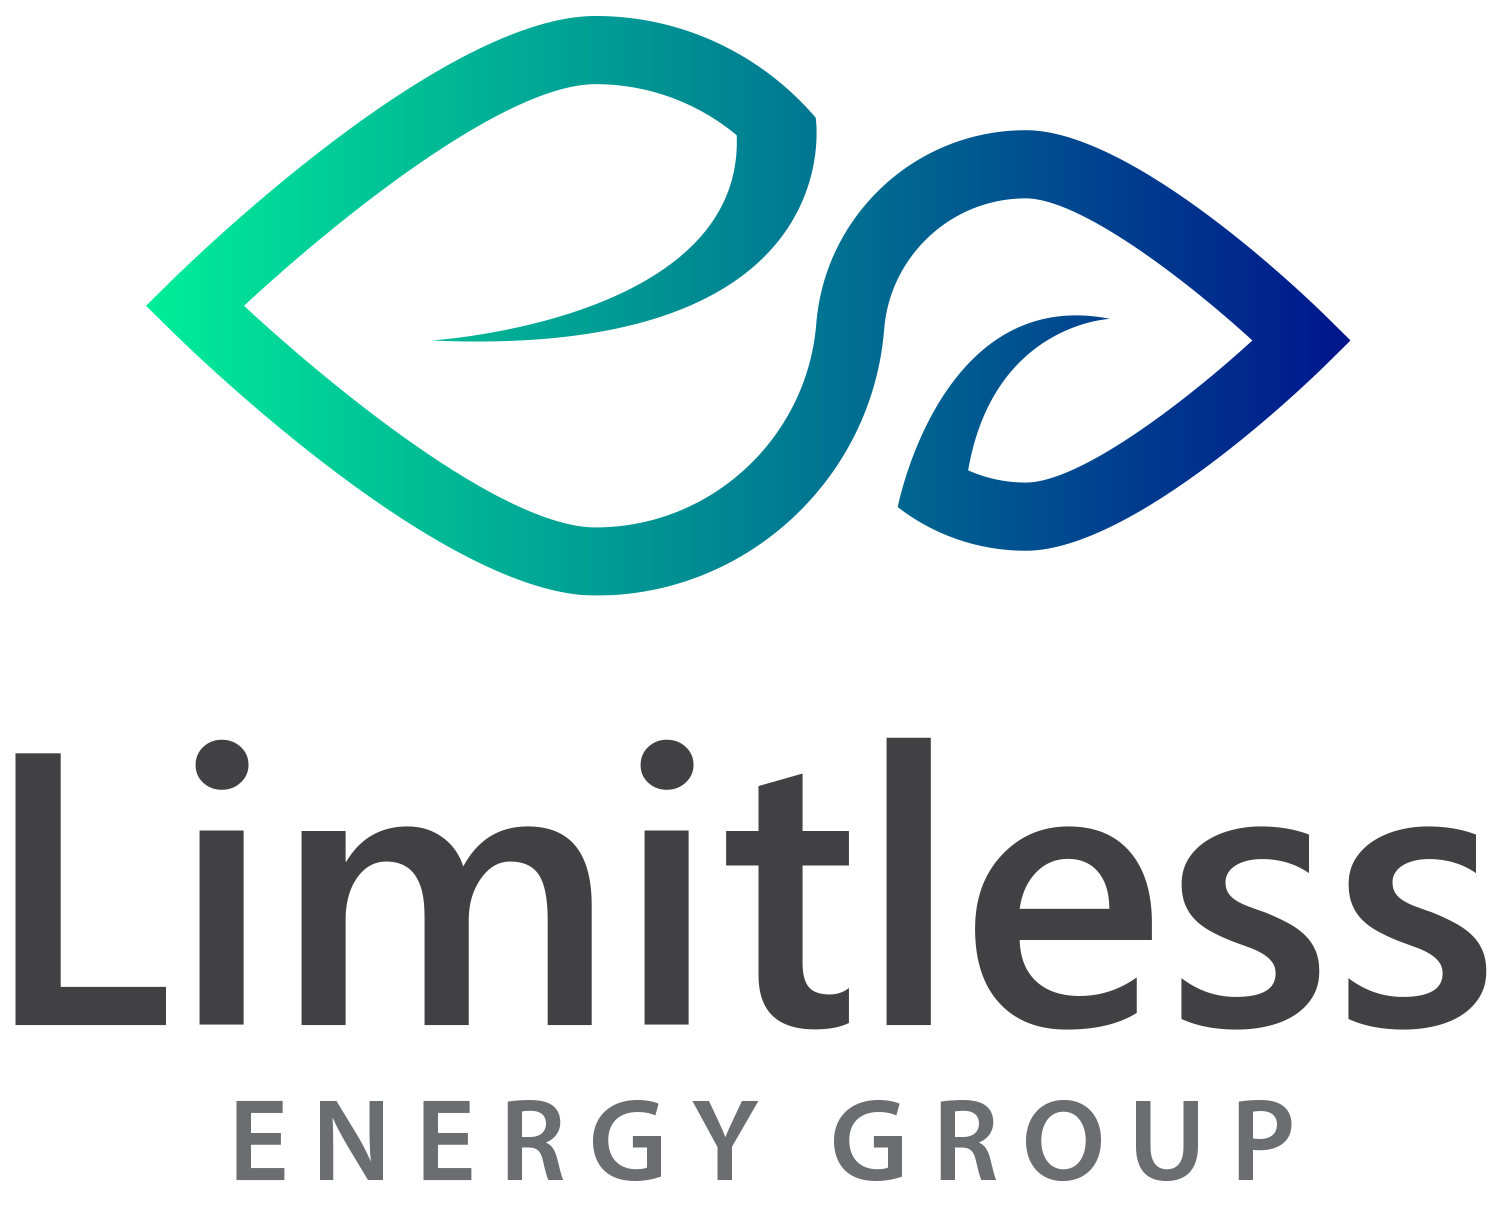 Limitless Energy Group logo